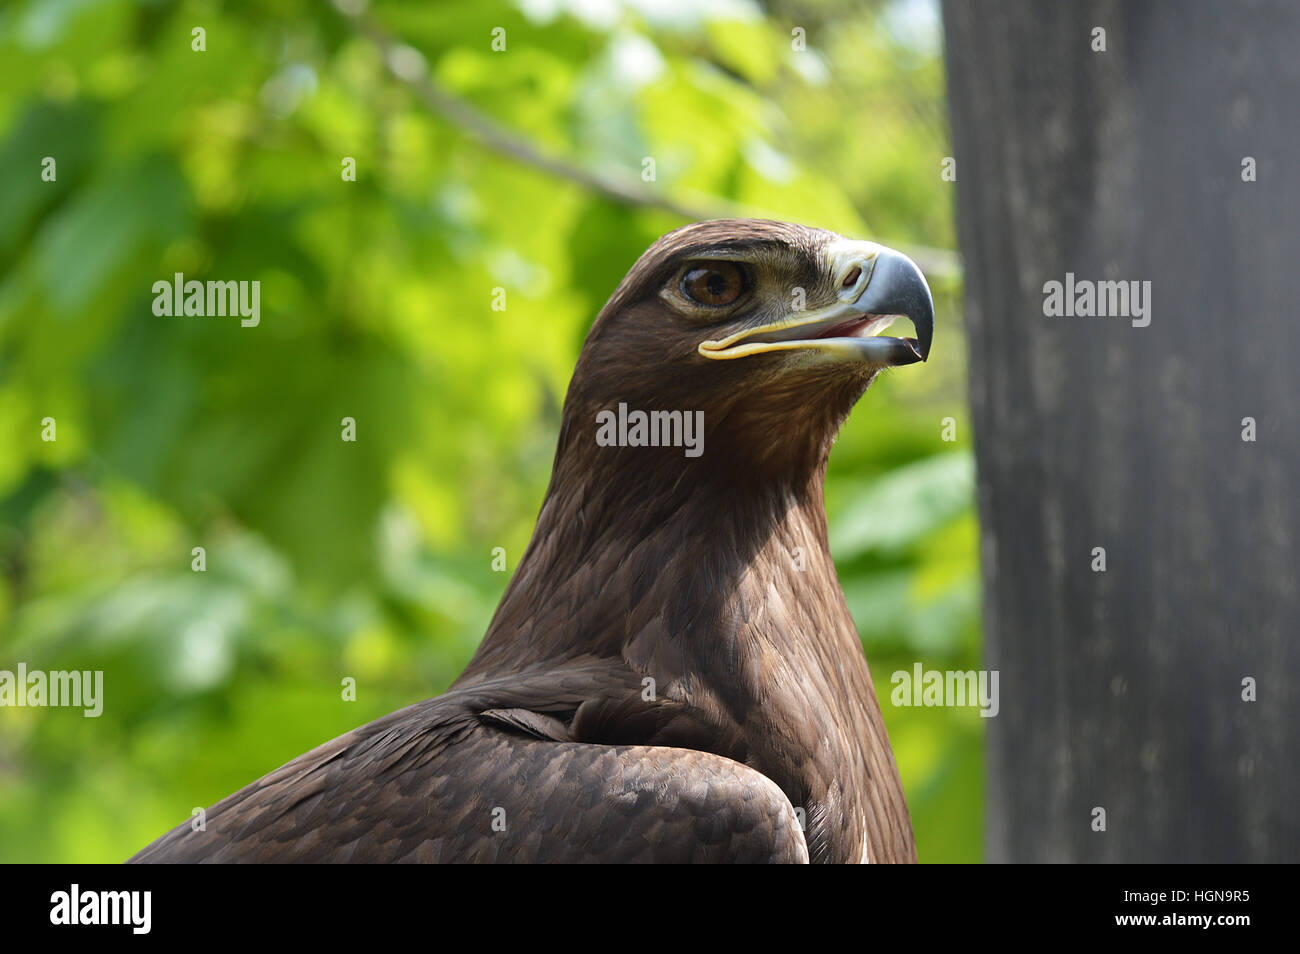 eagle wild bird on a tree Stock Photo